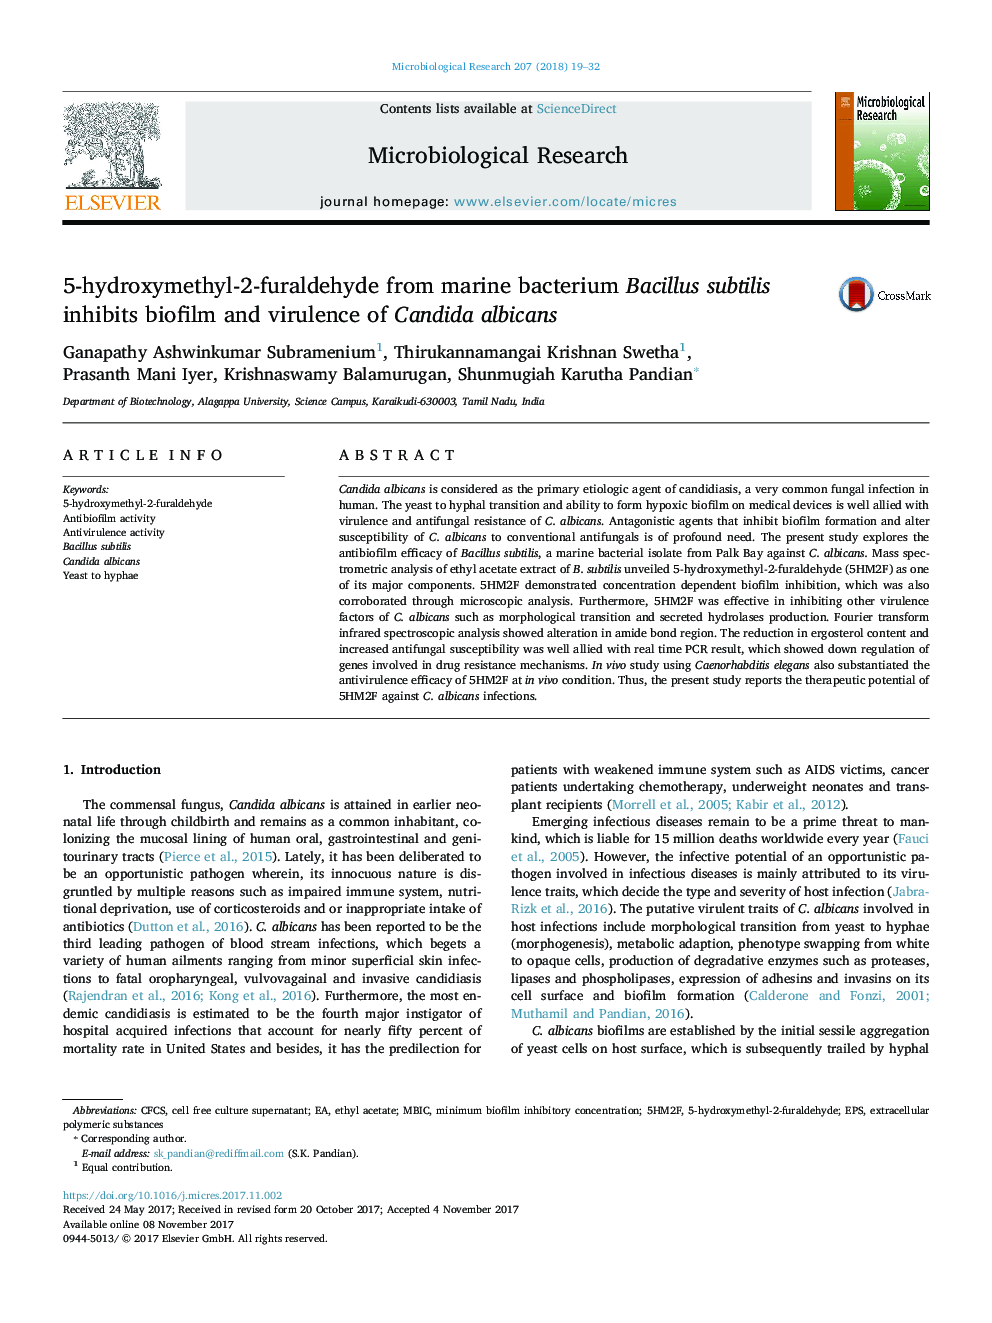 5-hydroxymethyl-2-furaldehyde from marine bacterium Bacillus subtilis inhibits biofilm and virulence of Candida albicans